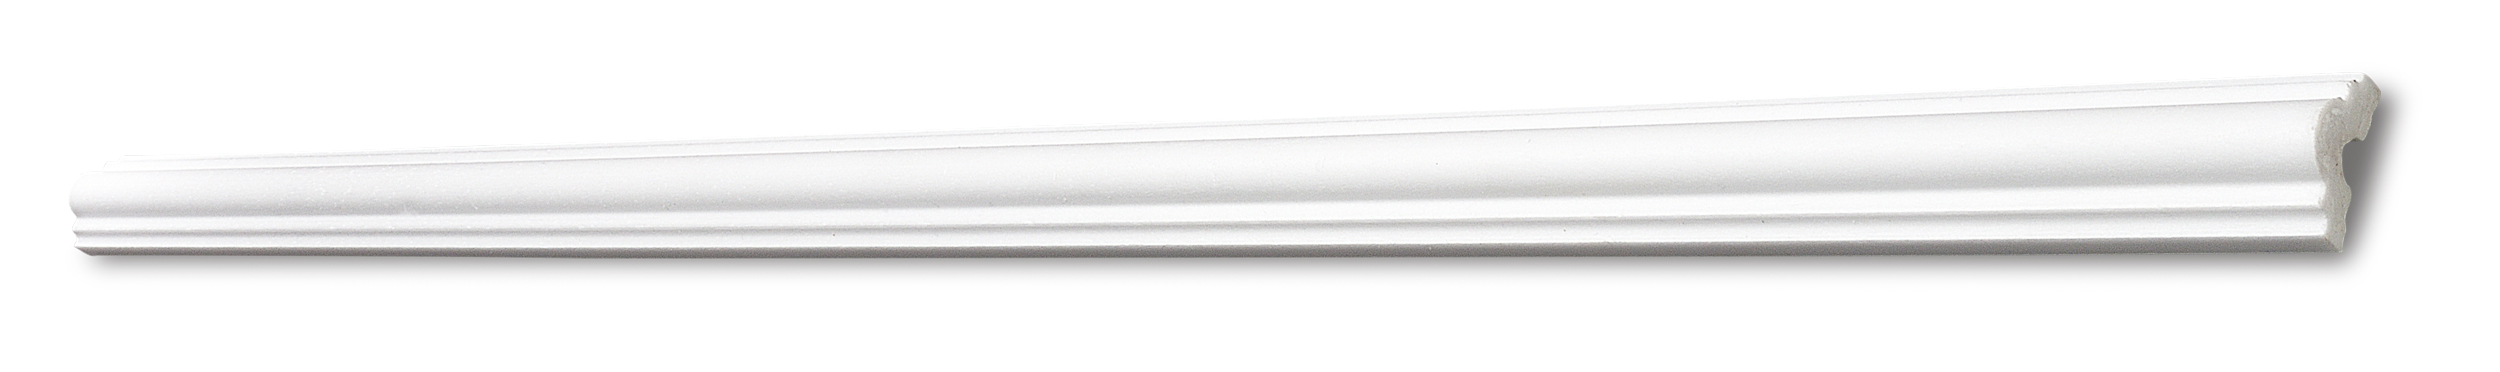 DECOSA Cimaise Melissa - polystyrène extra dur - blanc - 25 mm - longueur 2 m